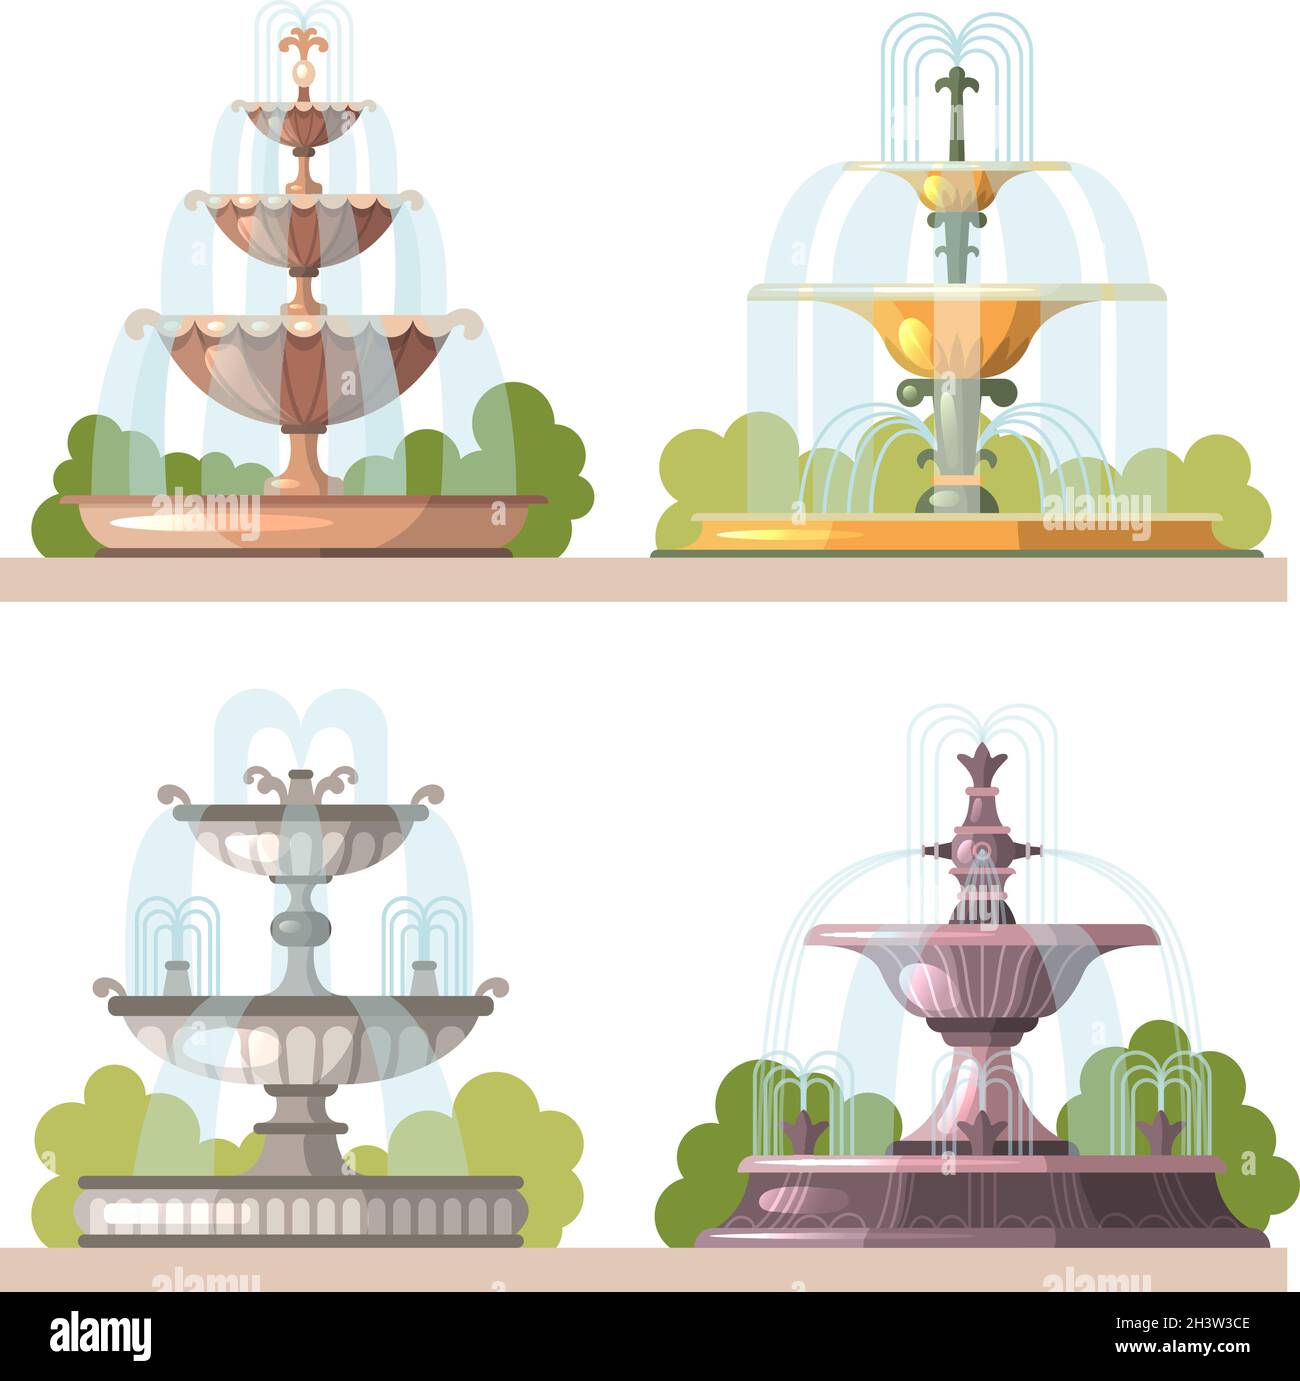 Springbrunnen. Wasser Schönheit dekorative Konstruktionen für Gärten Outdoor-Park Vektor Cartoon-Illustrationen Stock Vektor